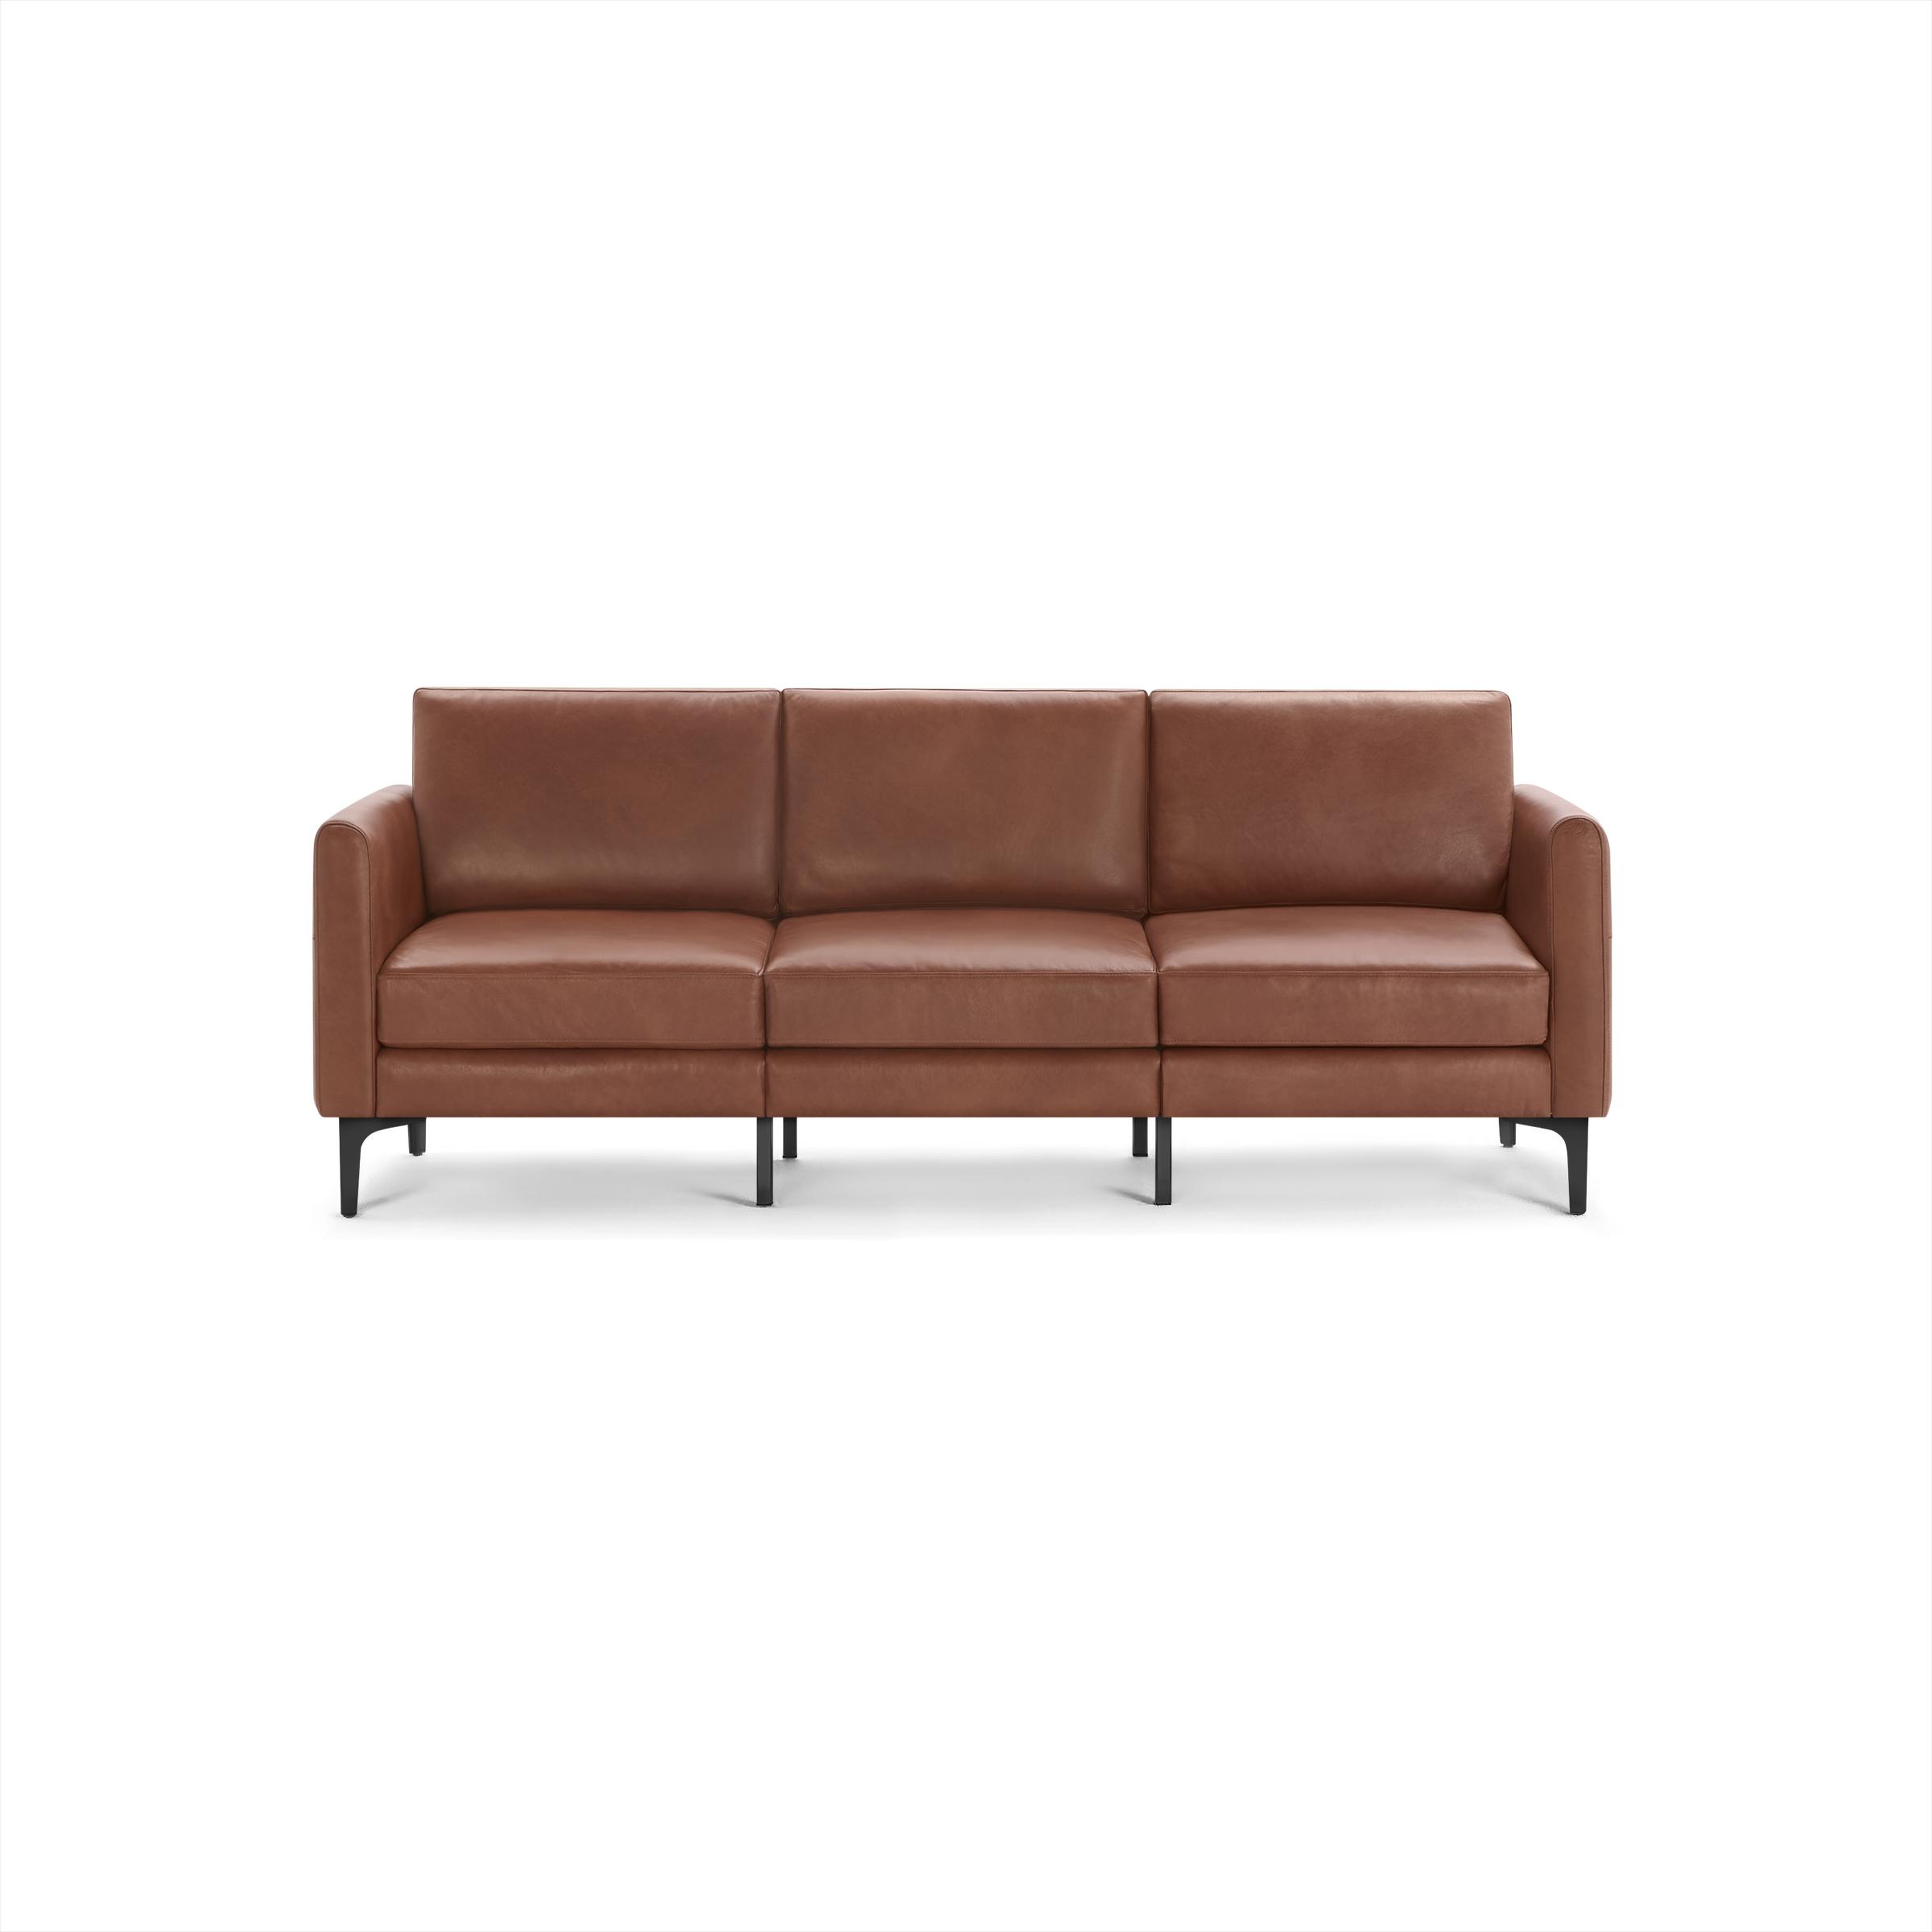 Nomad Leather Sofa in Chestnut, Black Metal Legs - Burrow